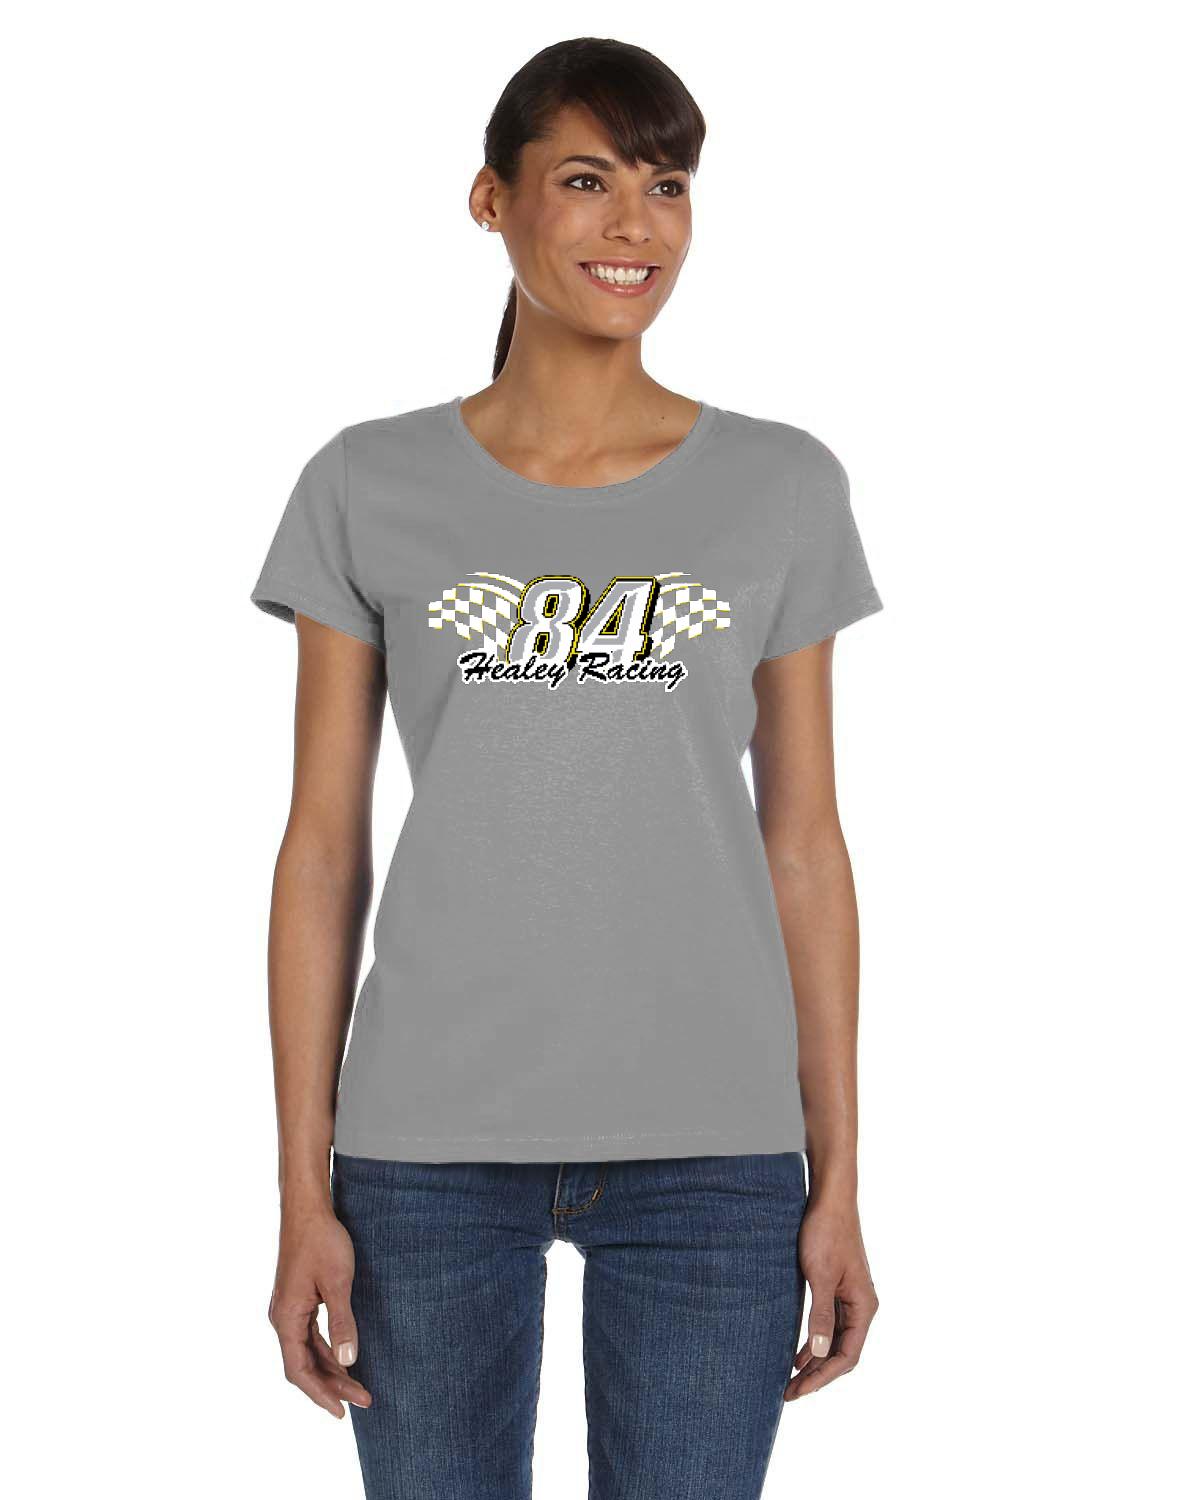 Healy Racing Ladies T-Shirt